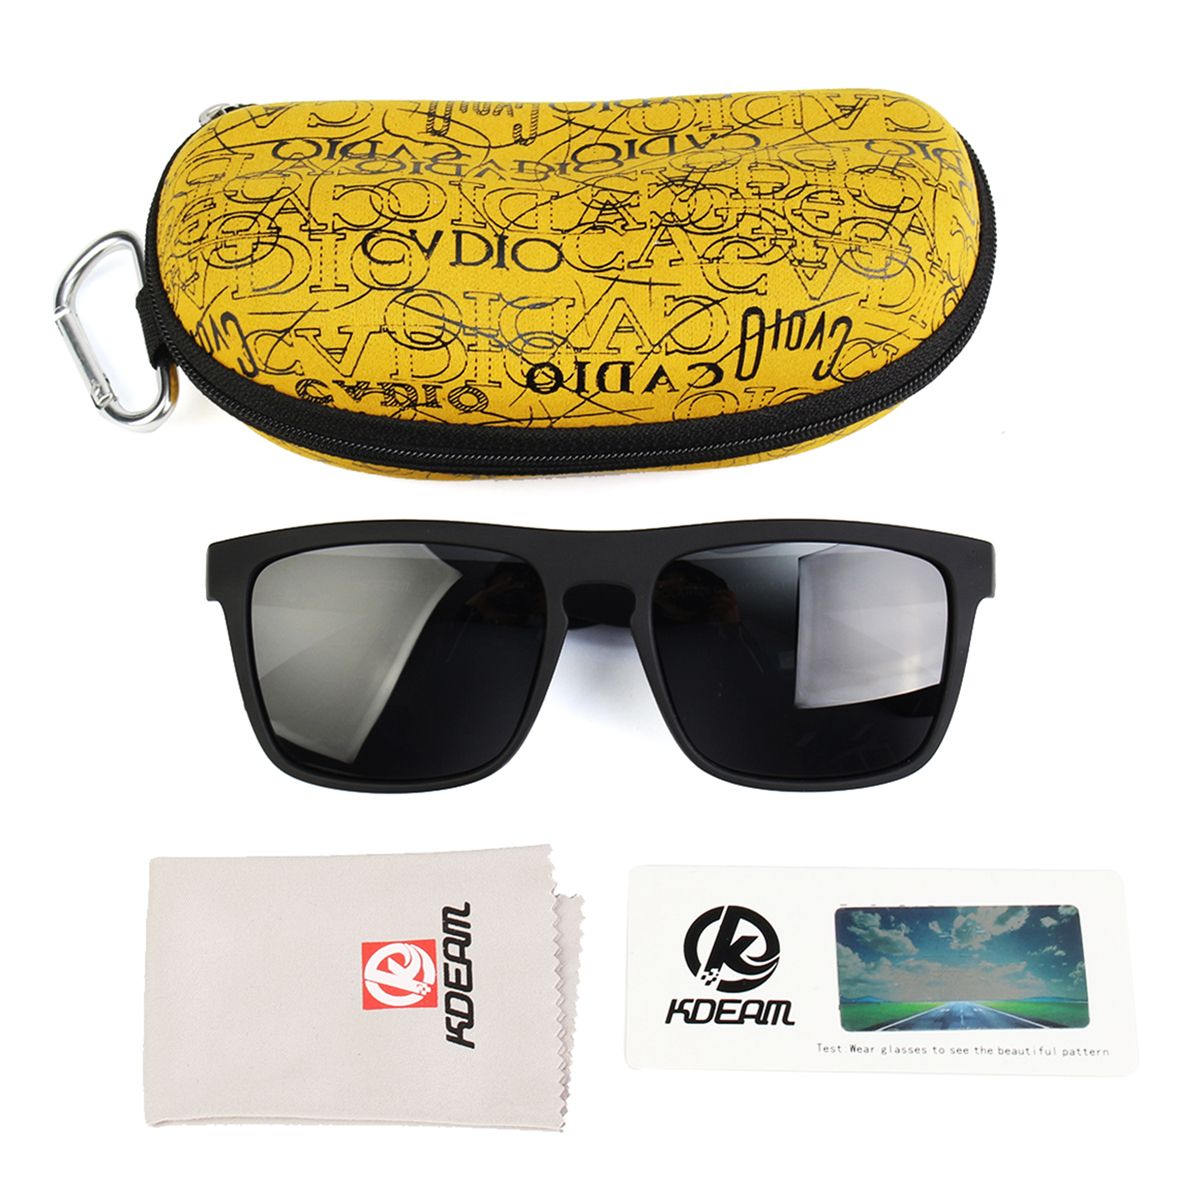 KDEAM-KD156-Polarized-Sunglasses-Men-Bike-Bicycle-Cycling-Eyewear-Driving-Reflective-Coating-UV400-W-1321889